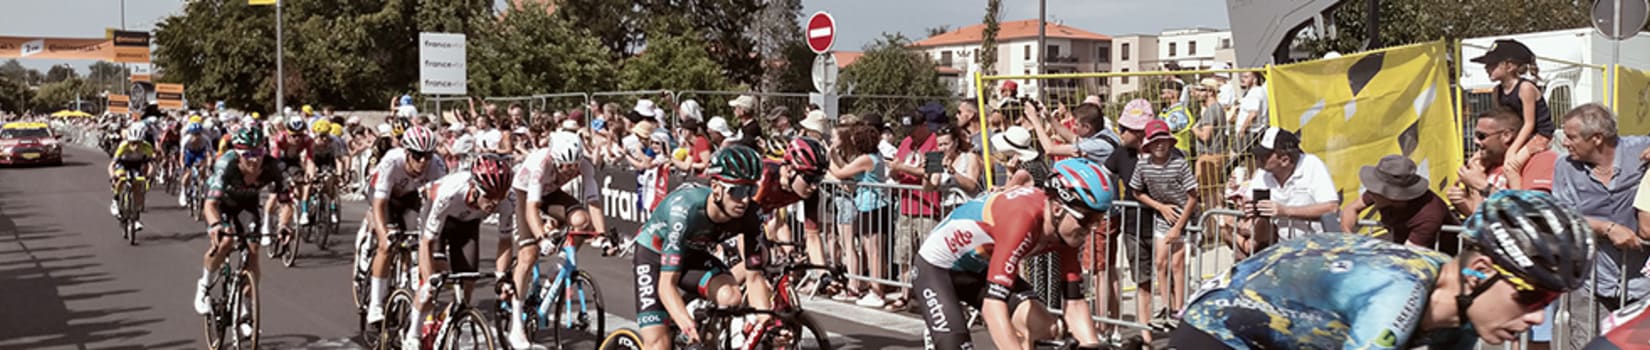 Constellium Issoire Welcomes Tour de France Riders - banner deskop